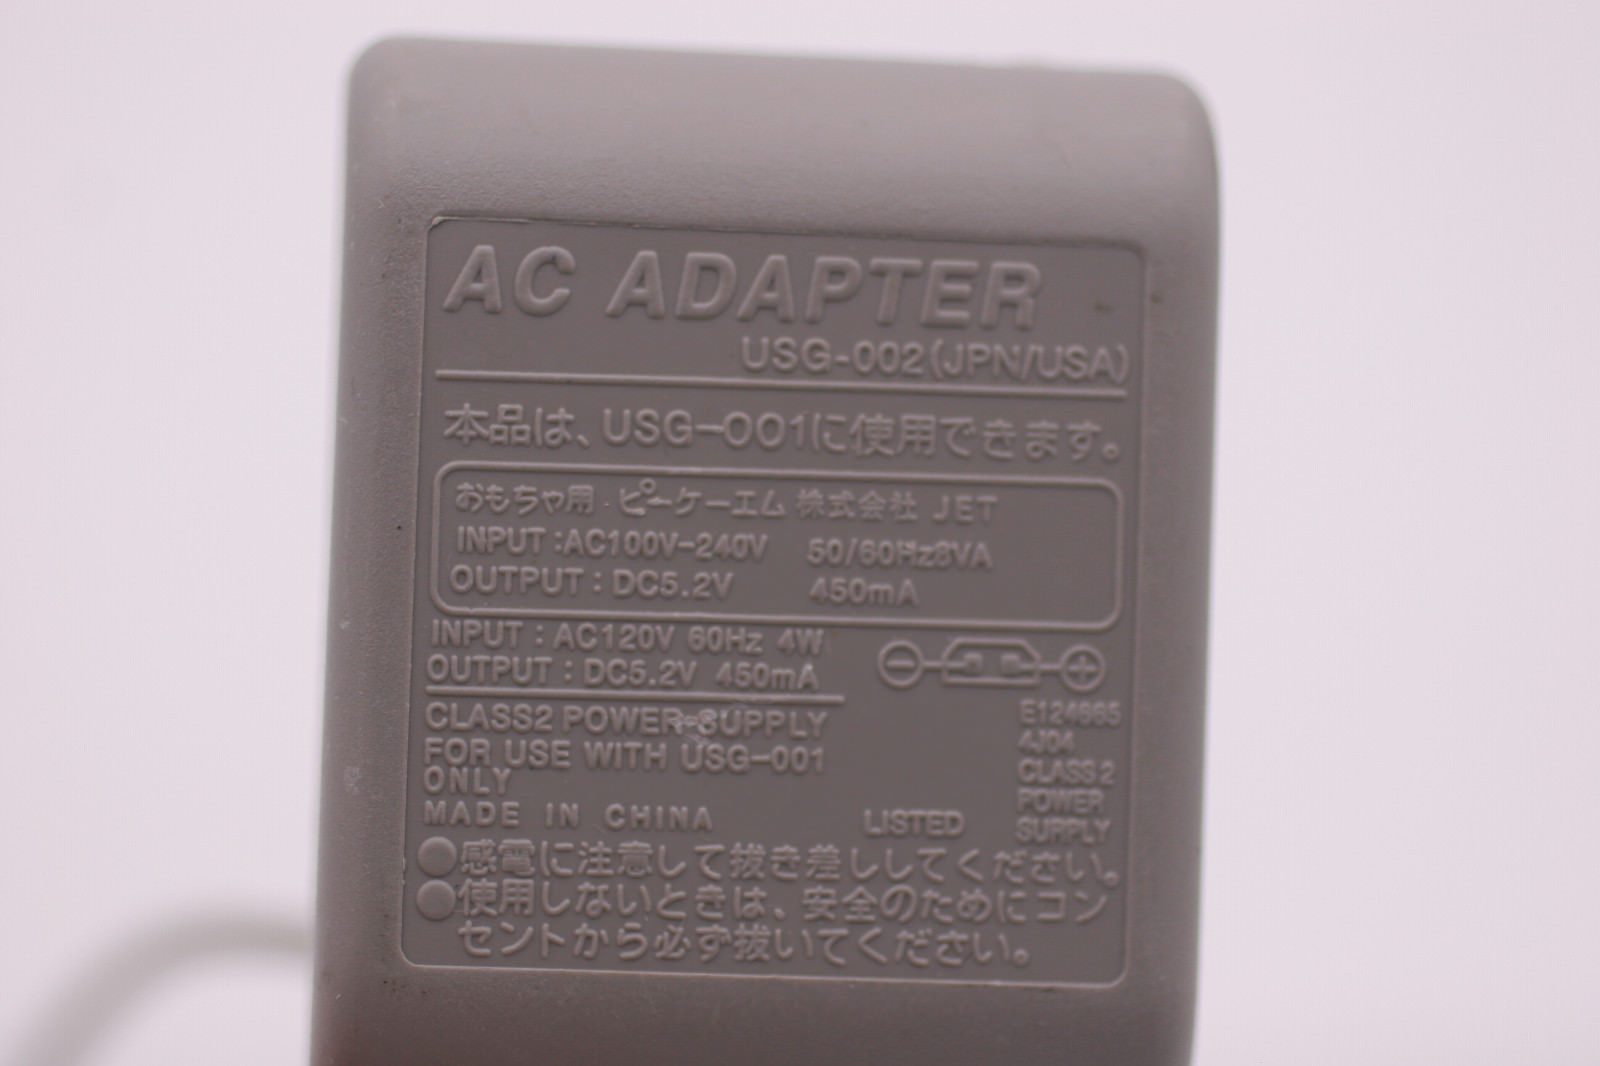 NEW 5.2V 450mA USG-001 AC ADAPTER